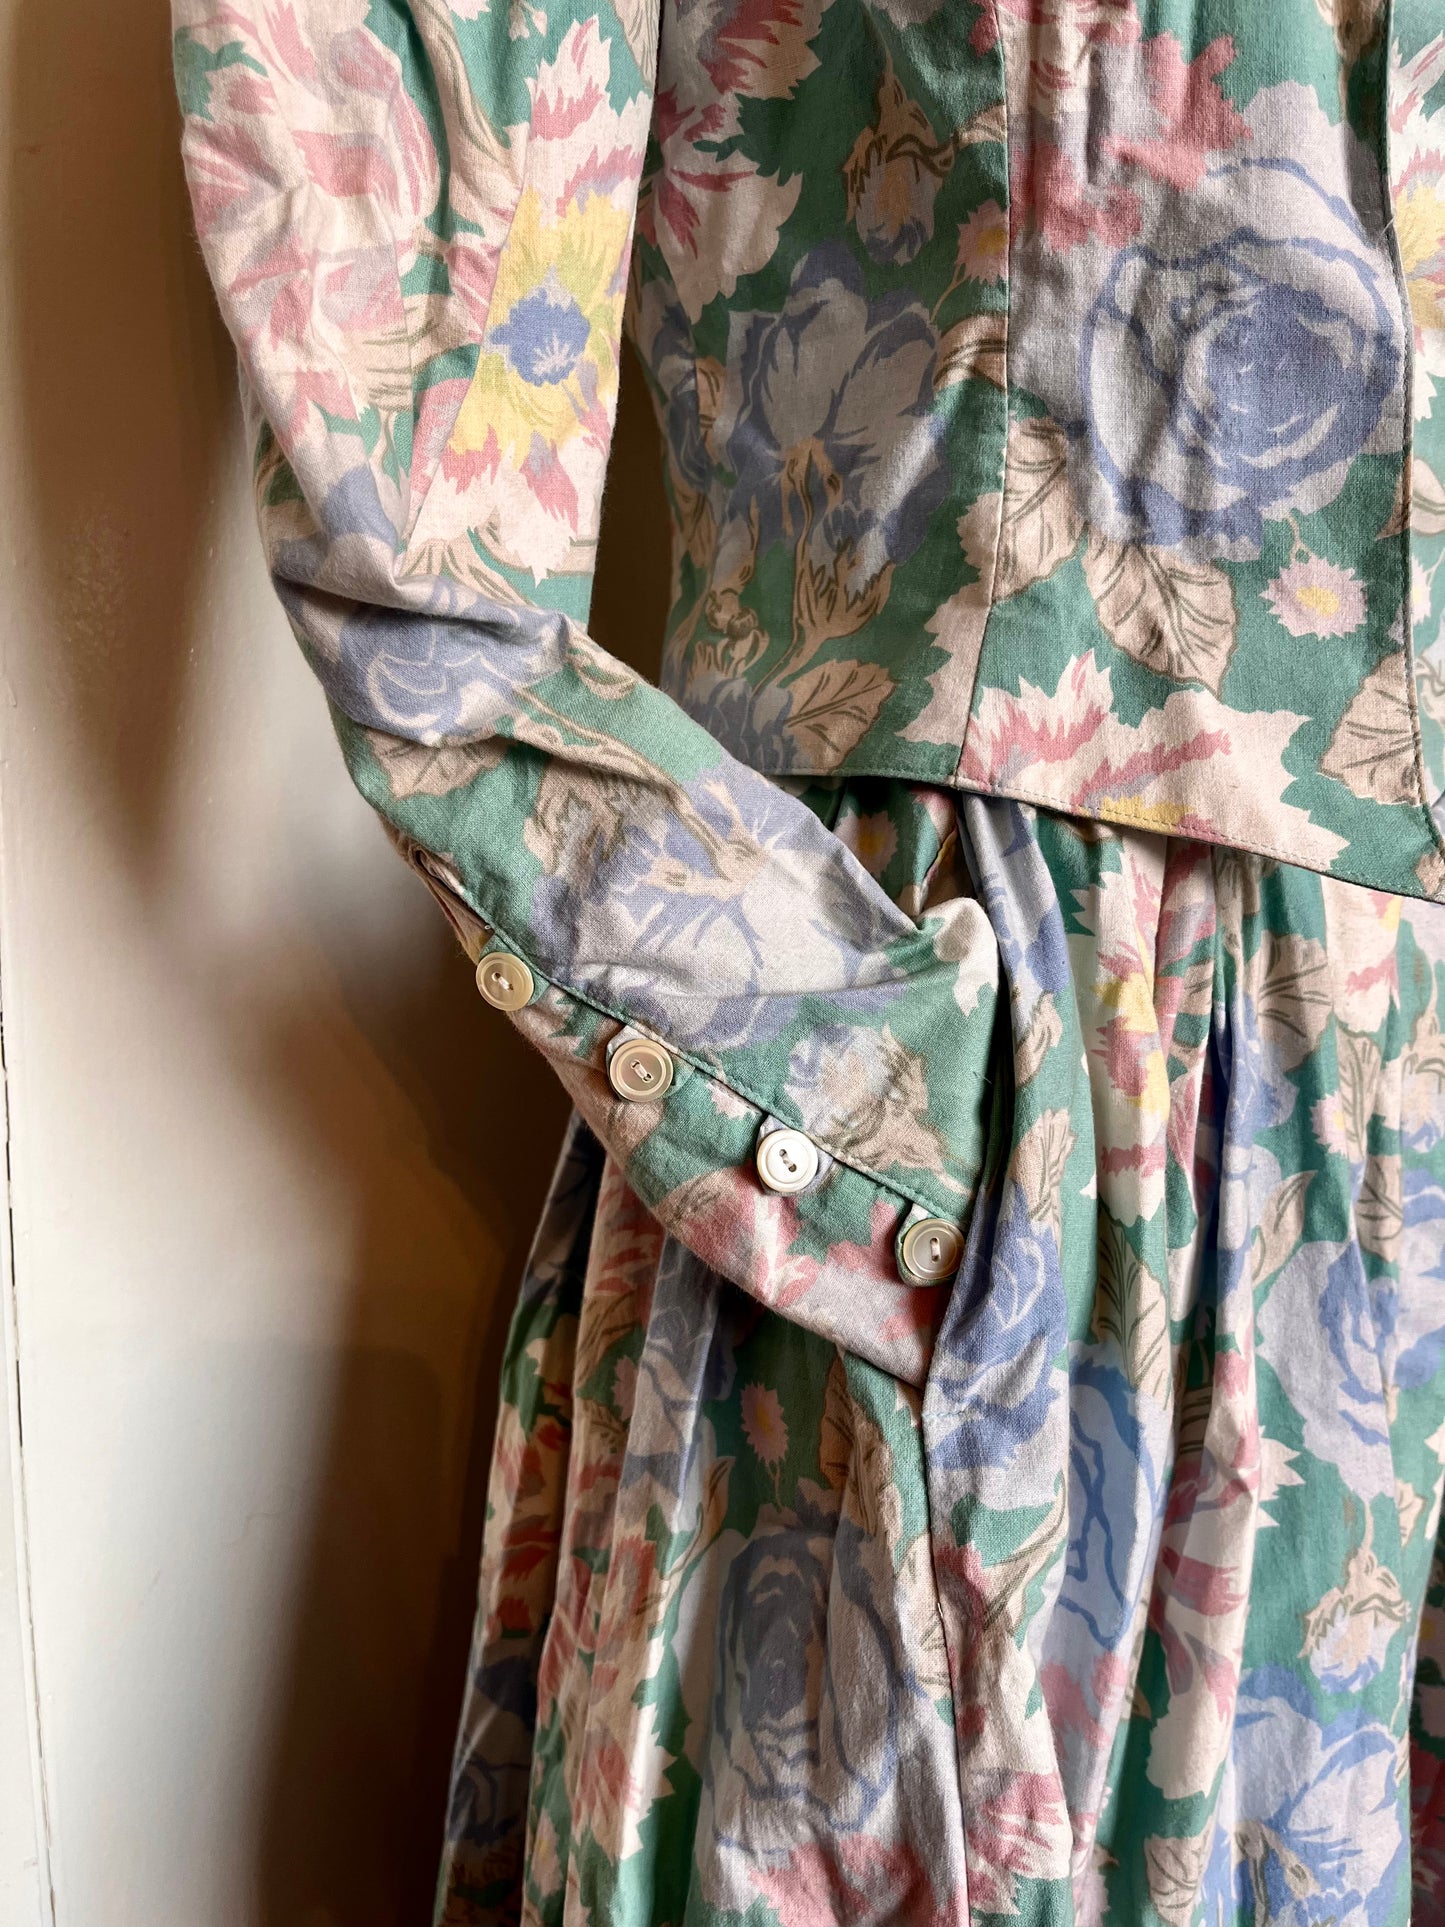 Vintage 1980’s "Laura Ashley" Jacket & Dress Set: Long Mutton Sleeve Open Jacket w/ Strapless Midi Dress in Green w/ Blue & Pink Flowers